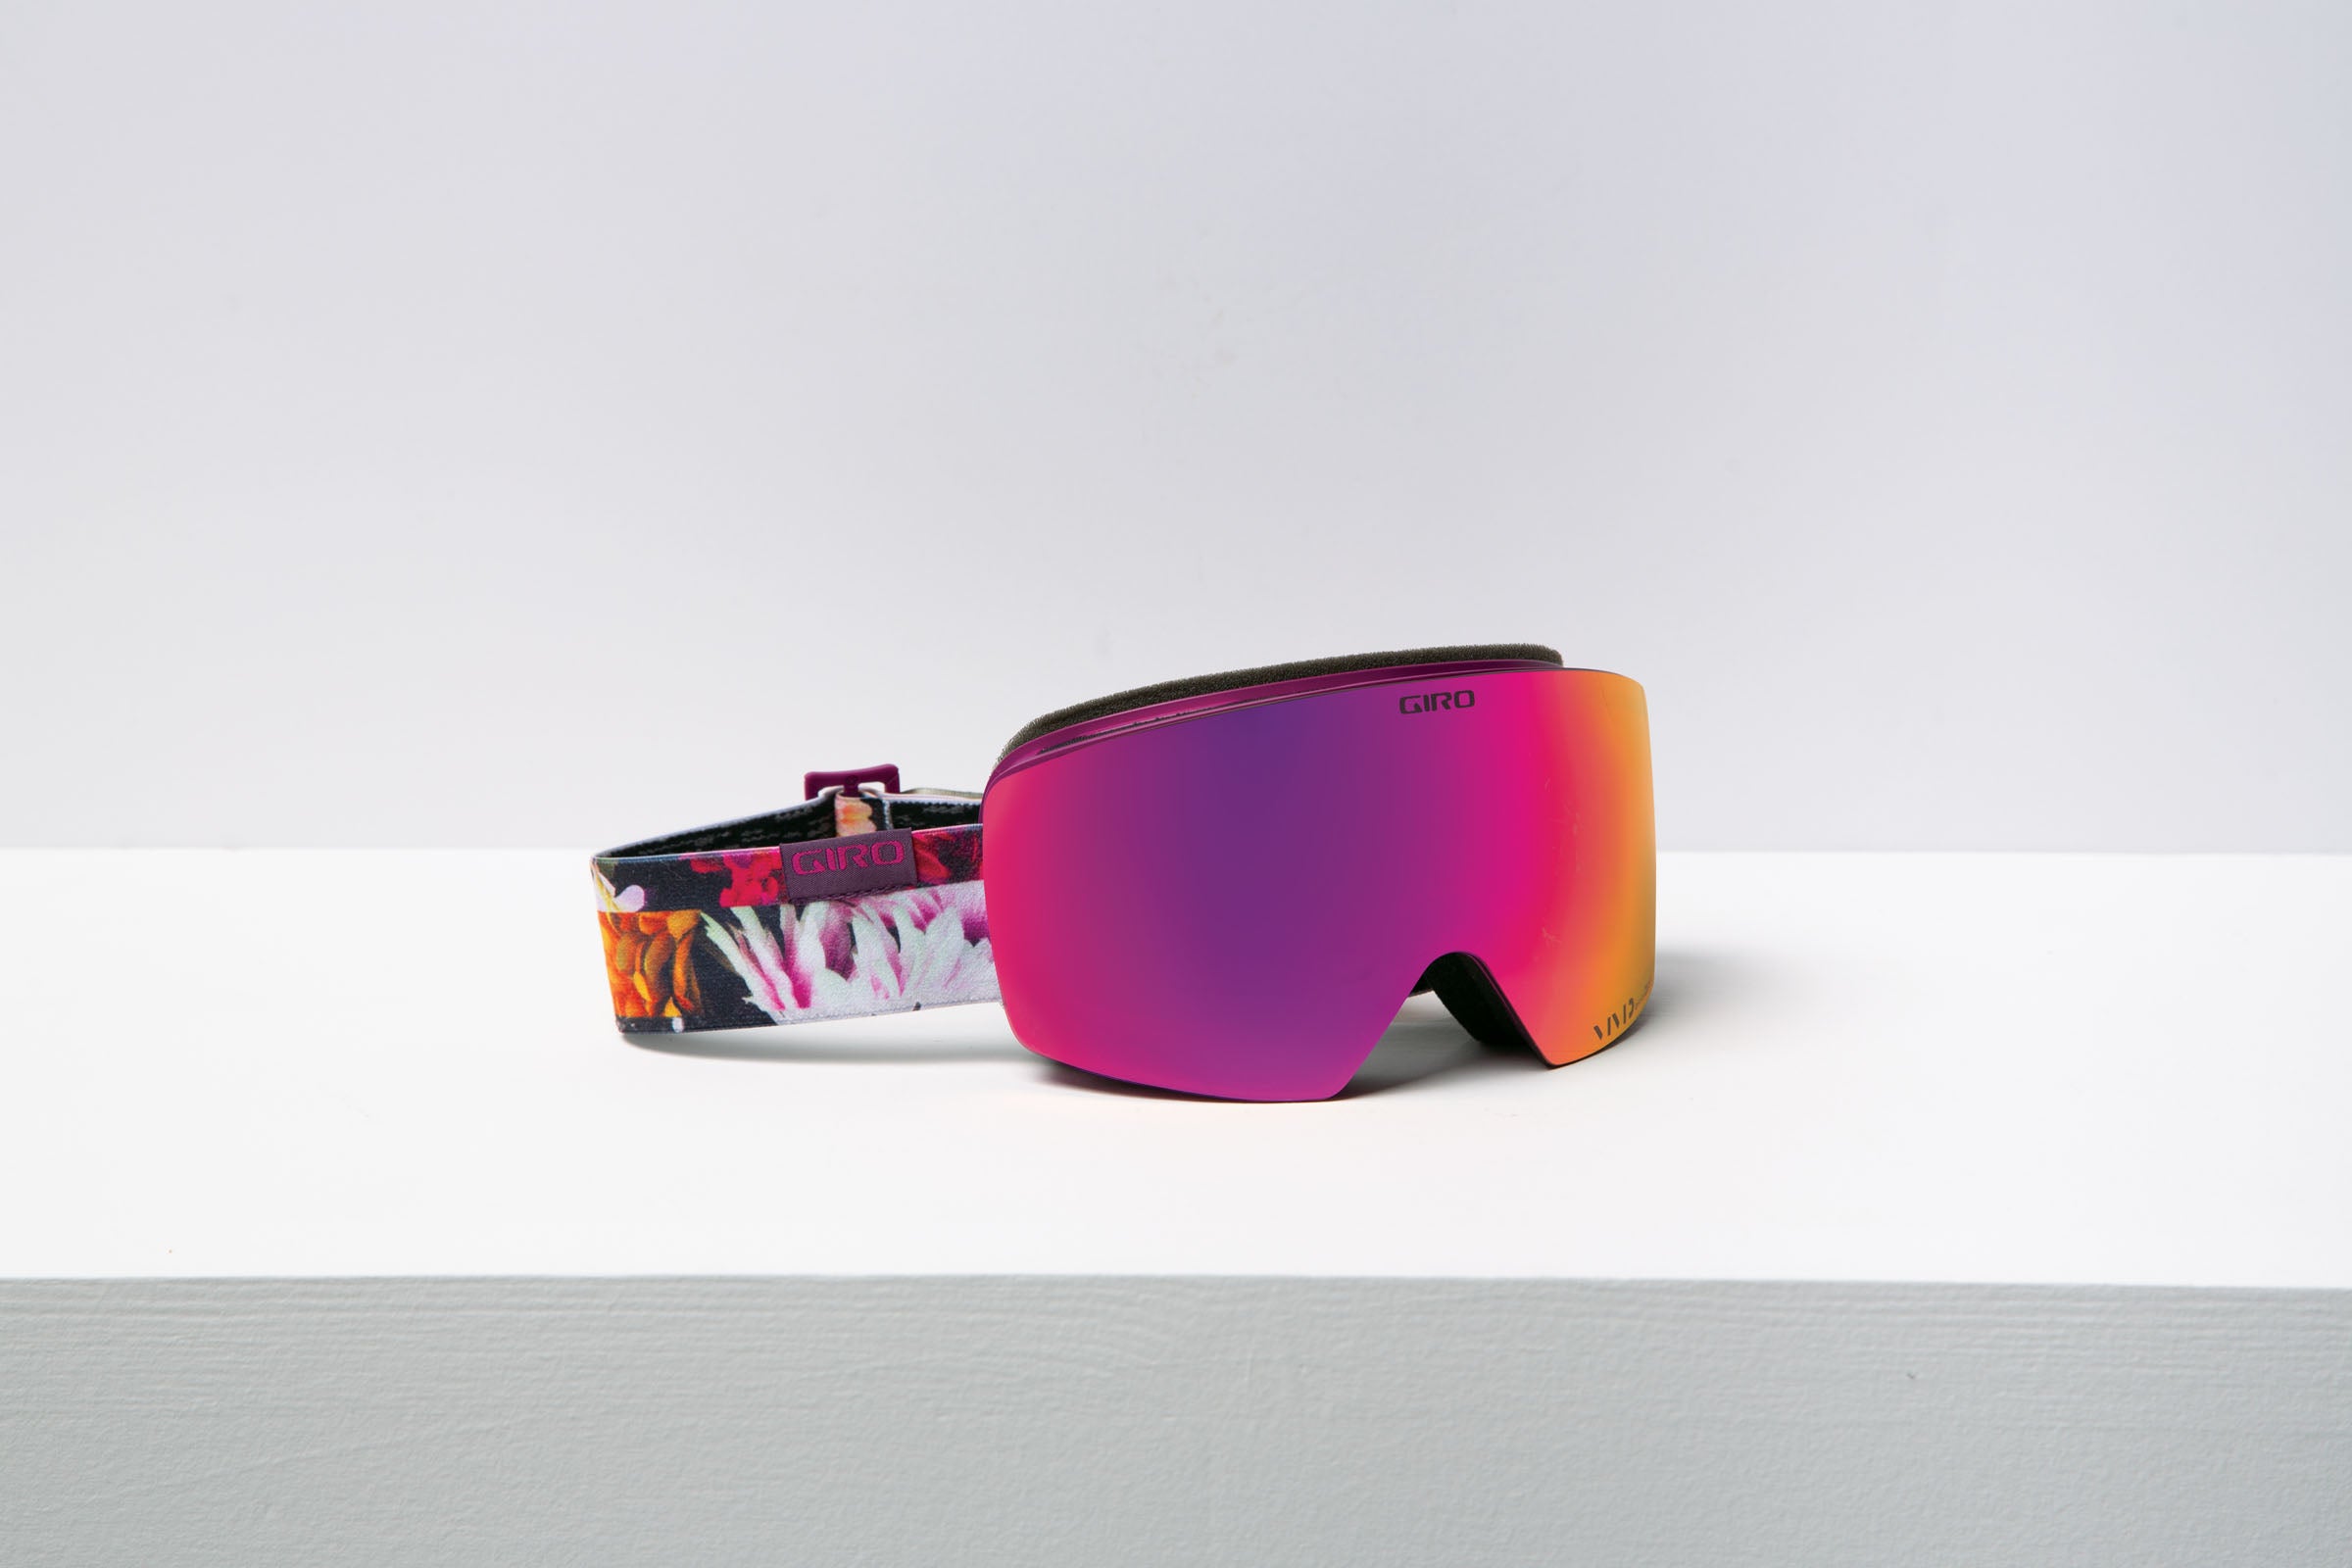 2022 Giro Contour RS goggles